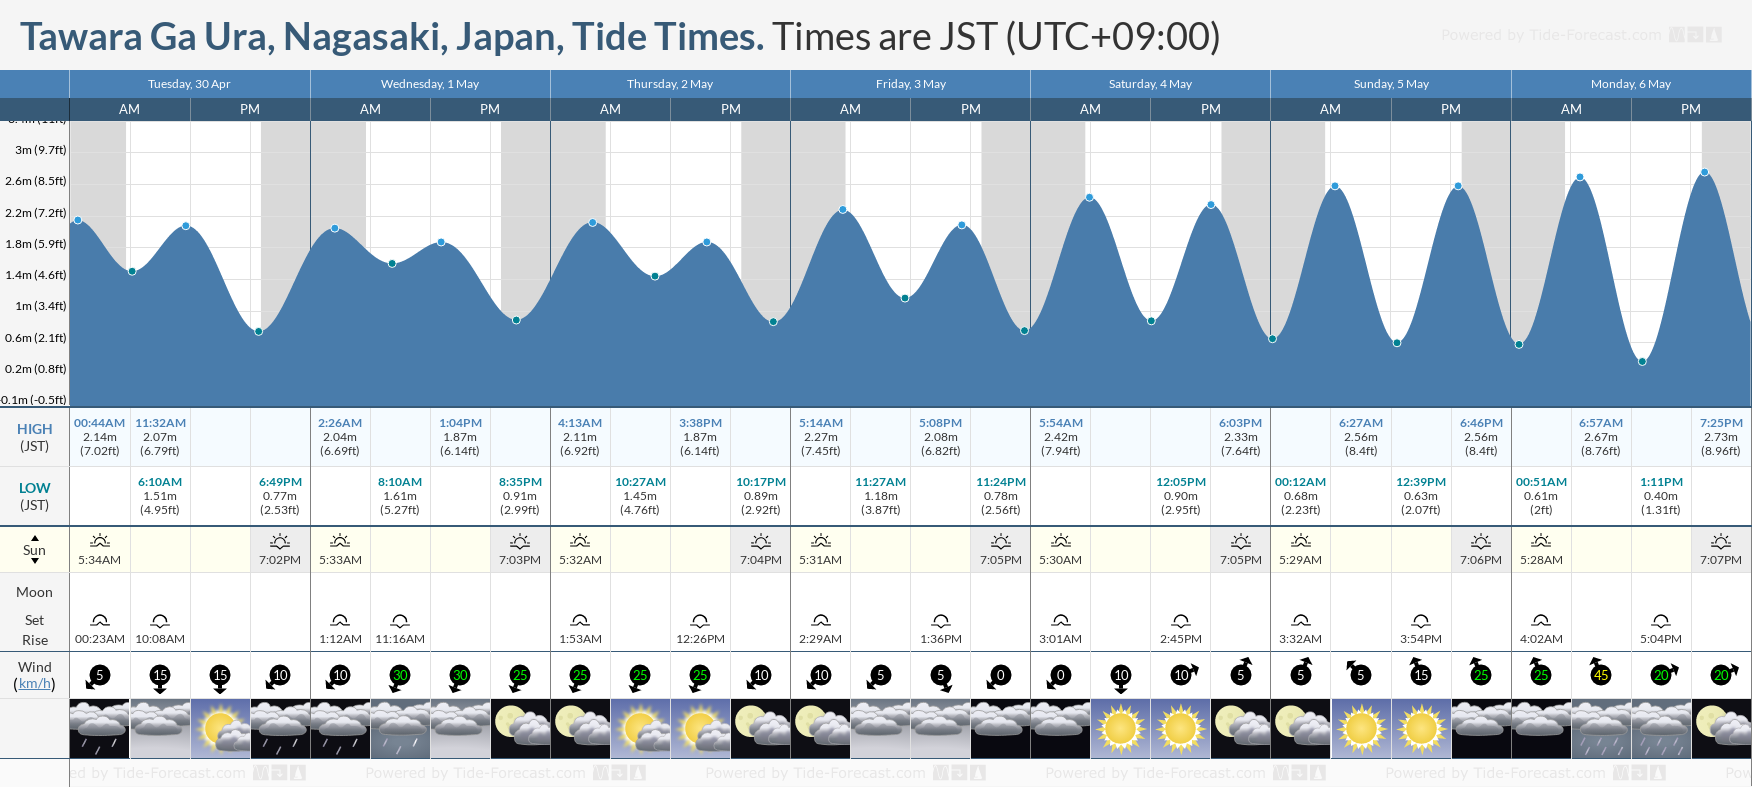 Tawara Ga Ura, Nagasaki, Japan Tide Chart including high and low tide tide times for the next 7 days